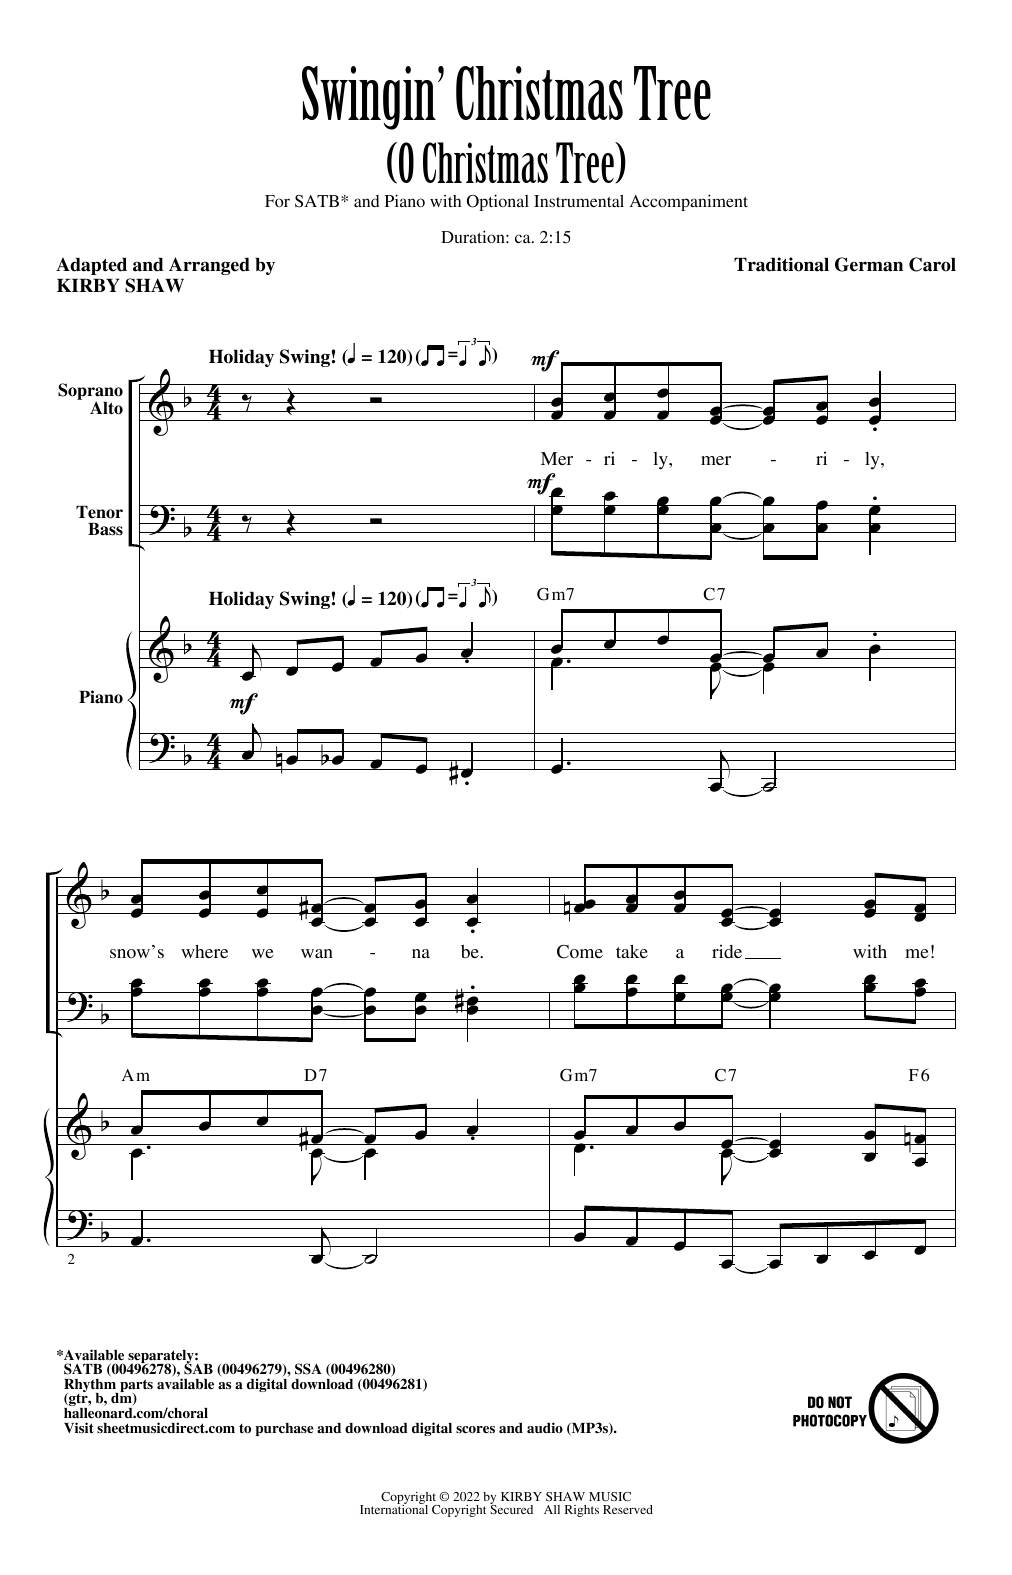 Traditional German Carol Swingin' Christmas Tree (O Christmas Tree) (arr. Kirby Shaw) Sheet Music Notes & Chords for SSA Choir - Download or Print PDF